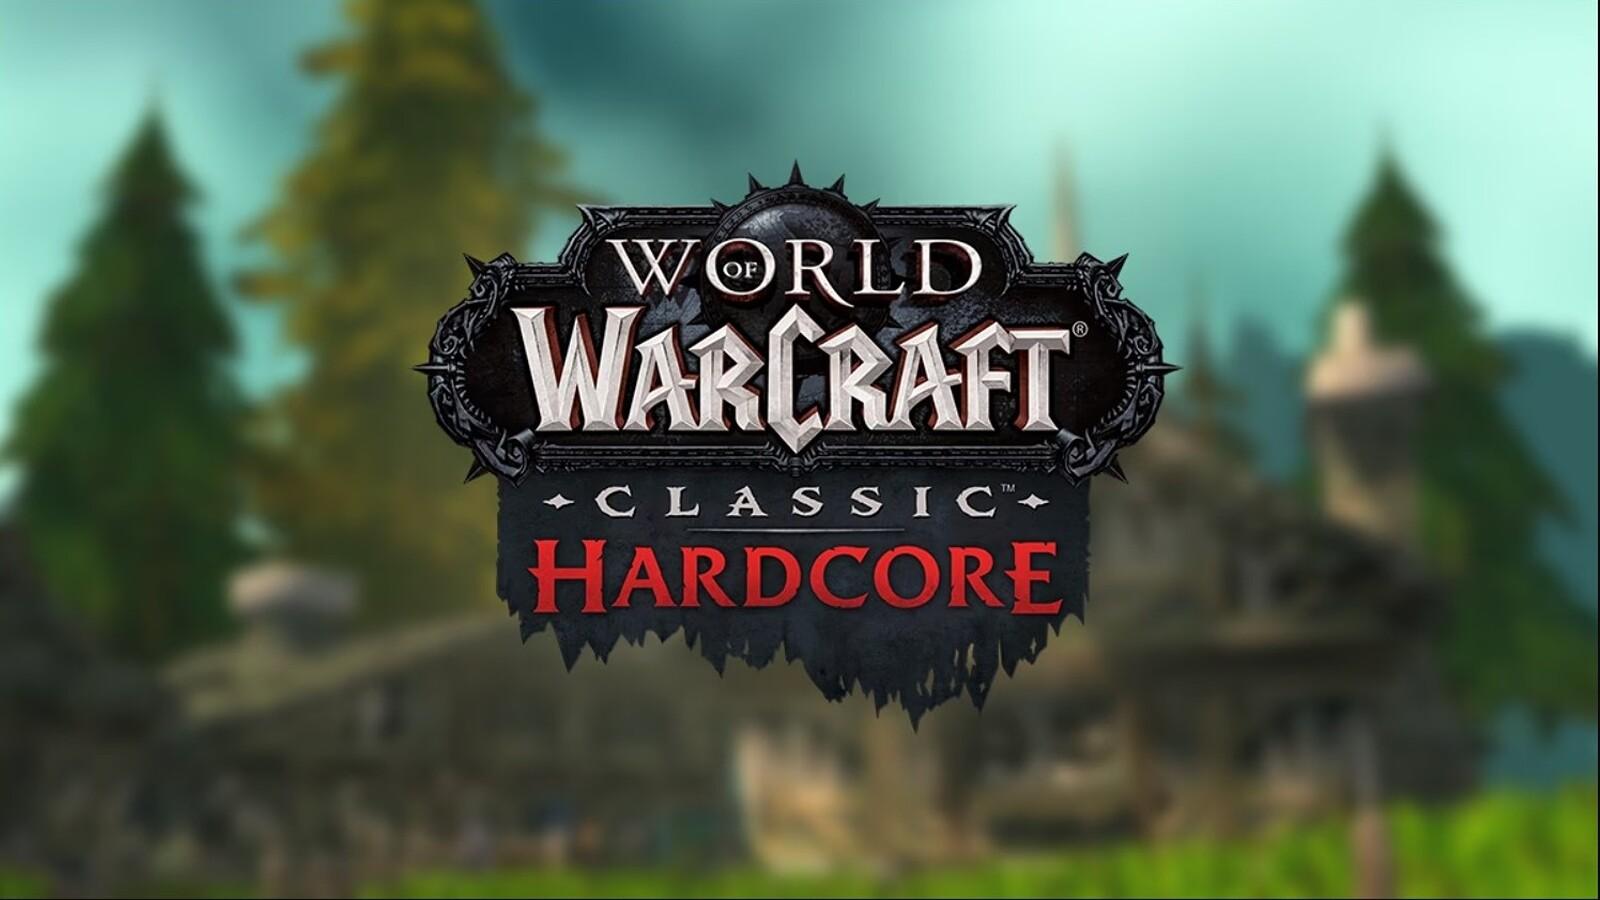 The Hardcore WoW logo